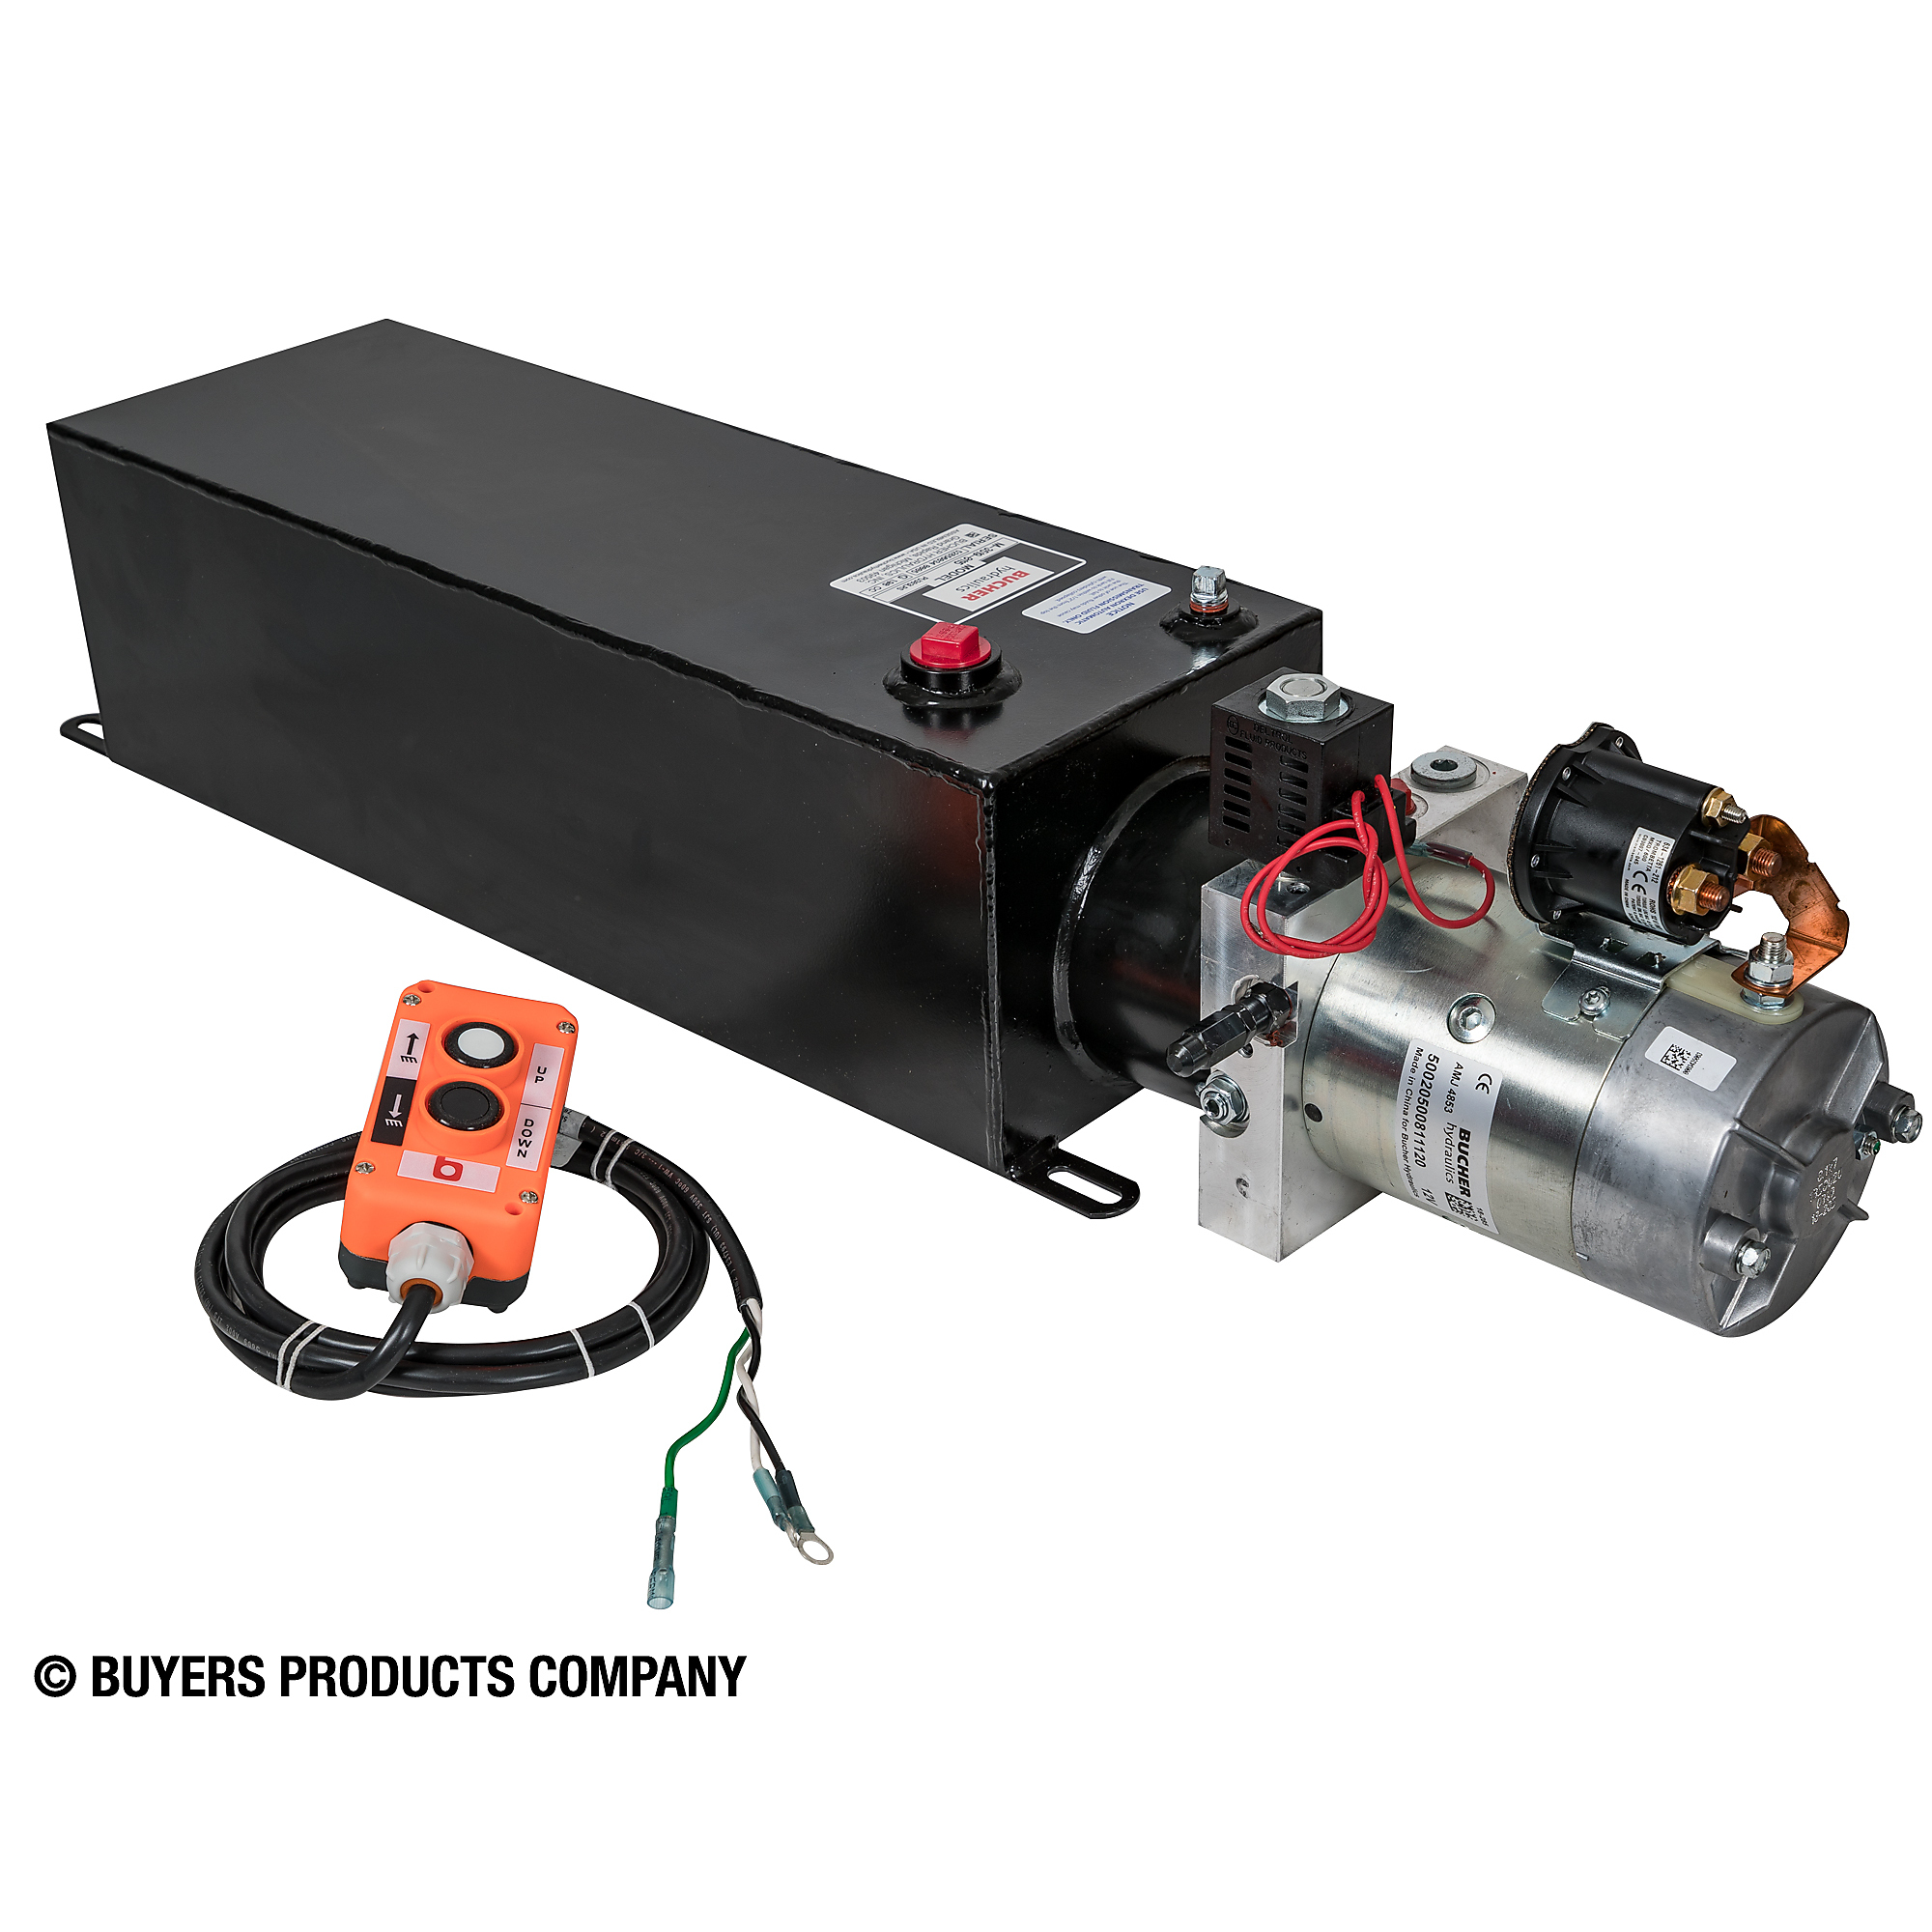 Buyers Products, Steel Reservoir Power Unit, Max. PSI 2500 Max. RPM 0 Model PU303LRS